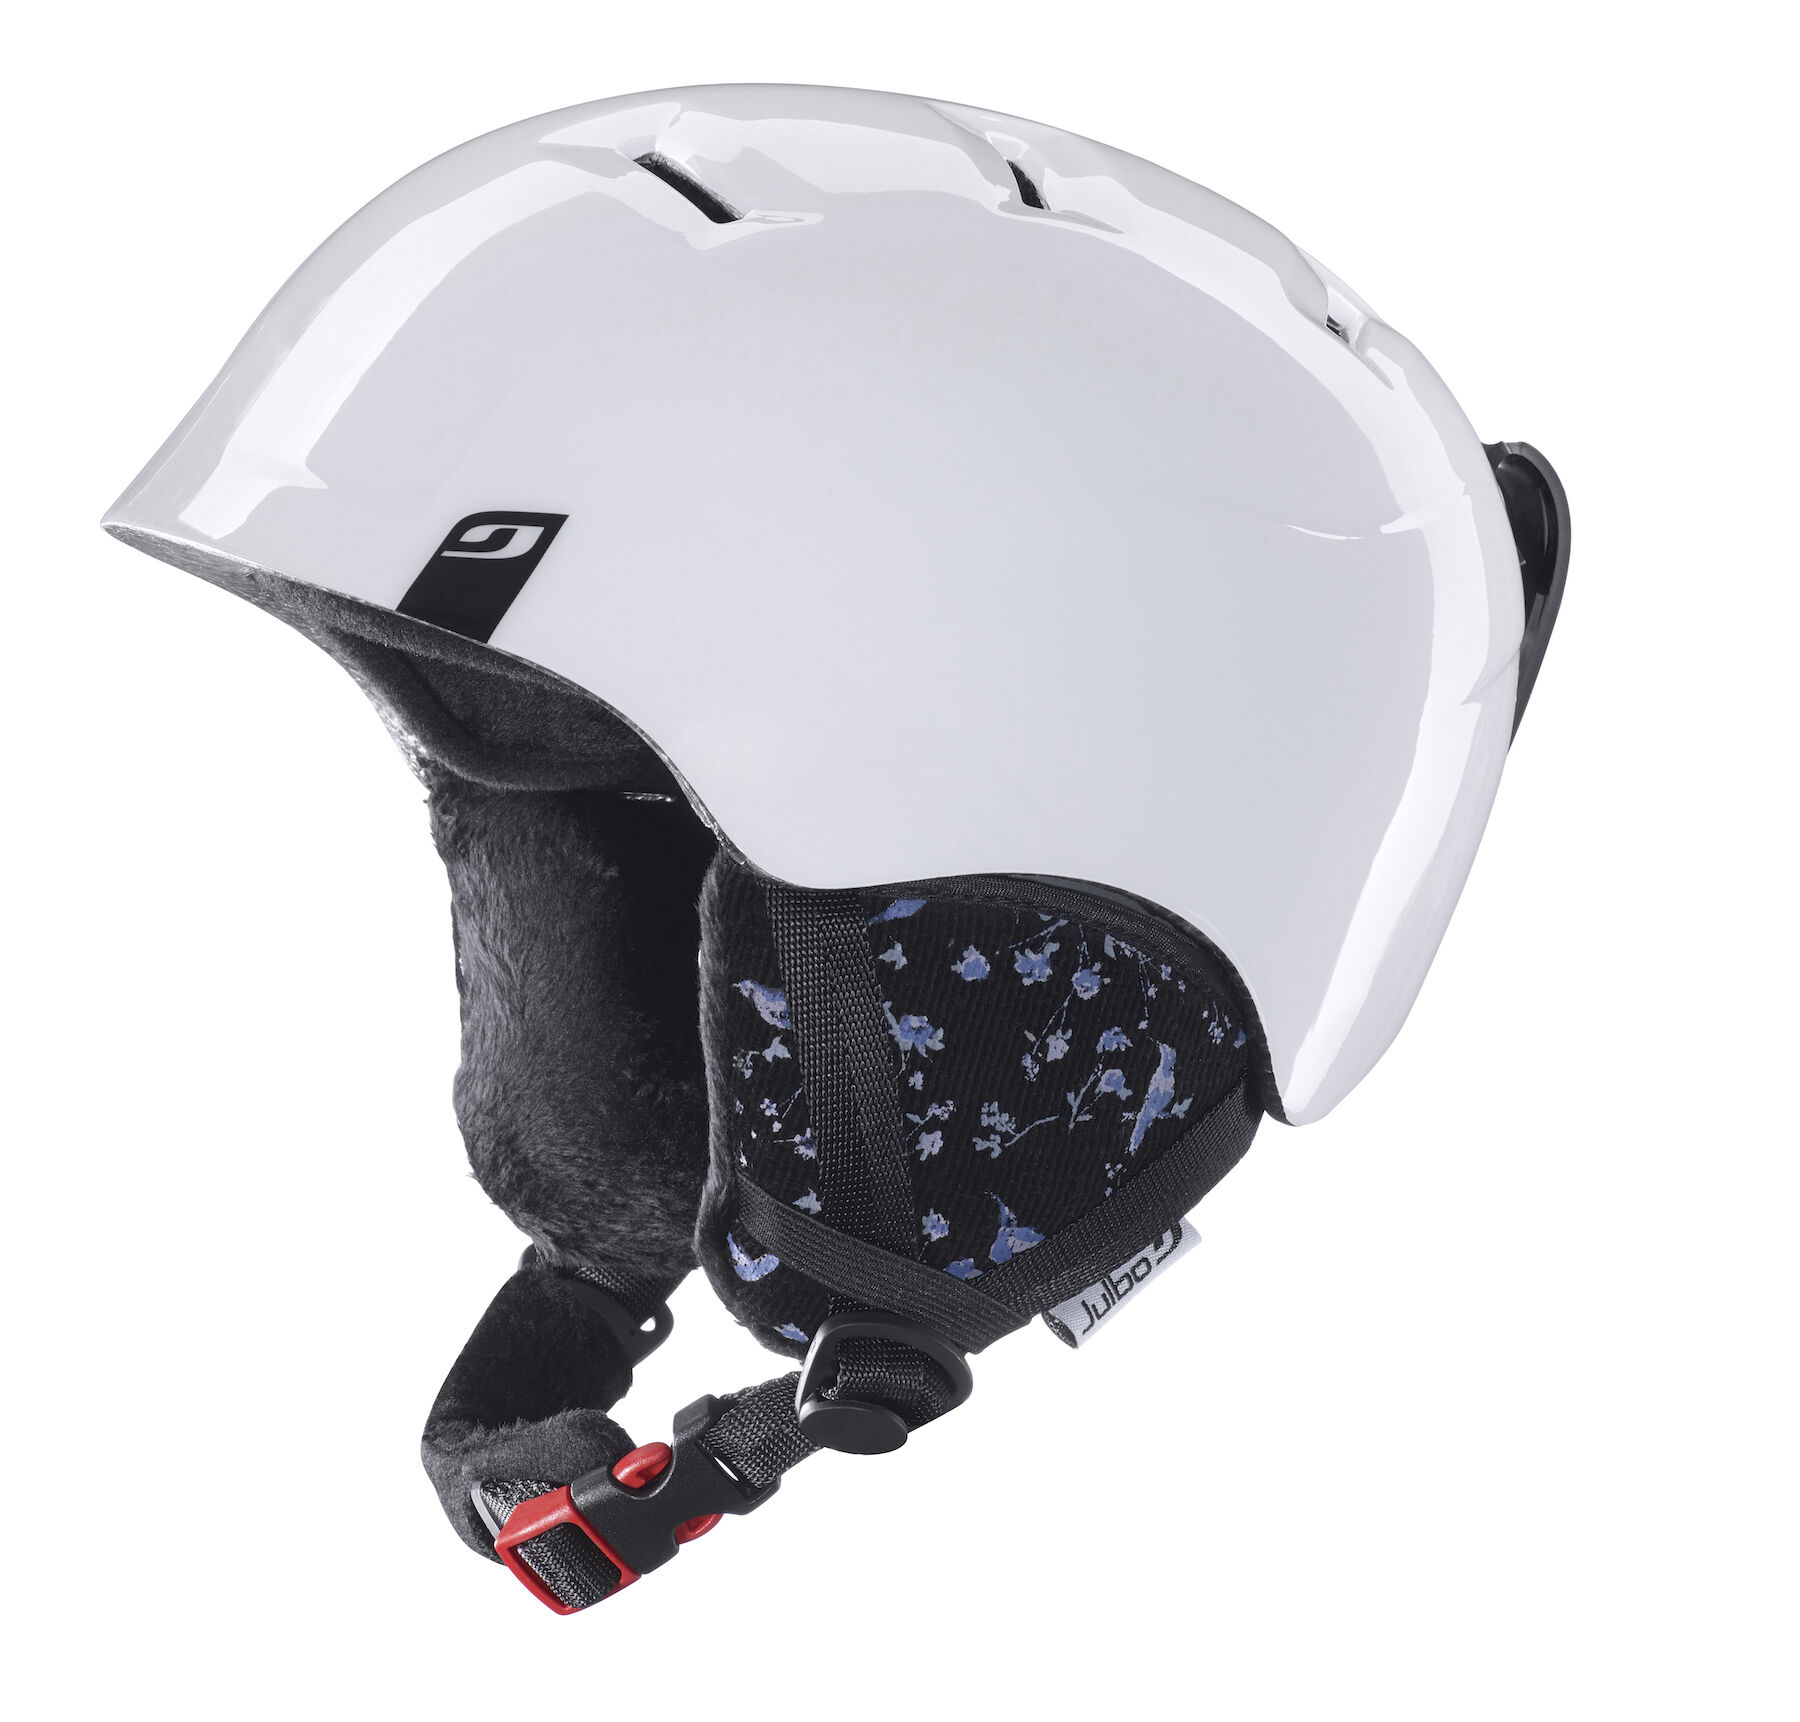 Julbo - Twist - Ski helmet - Kids